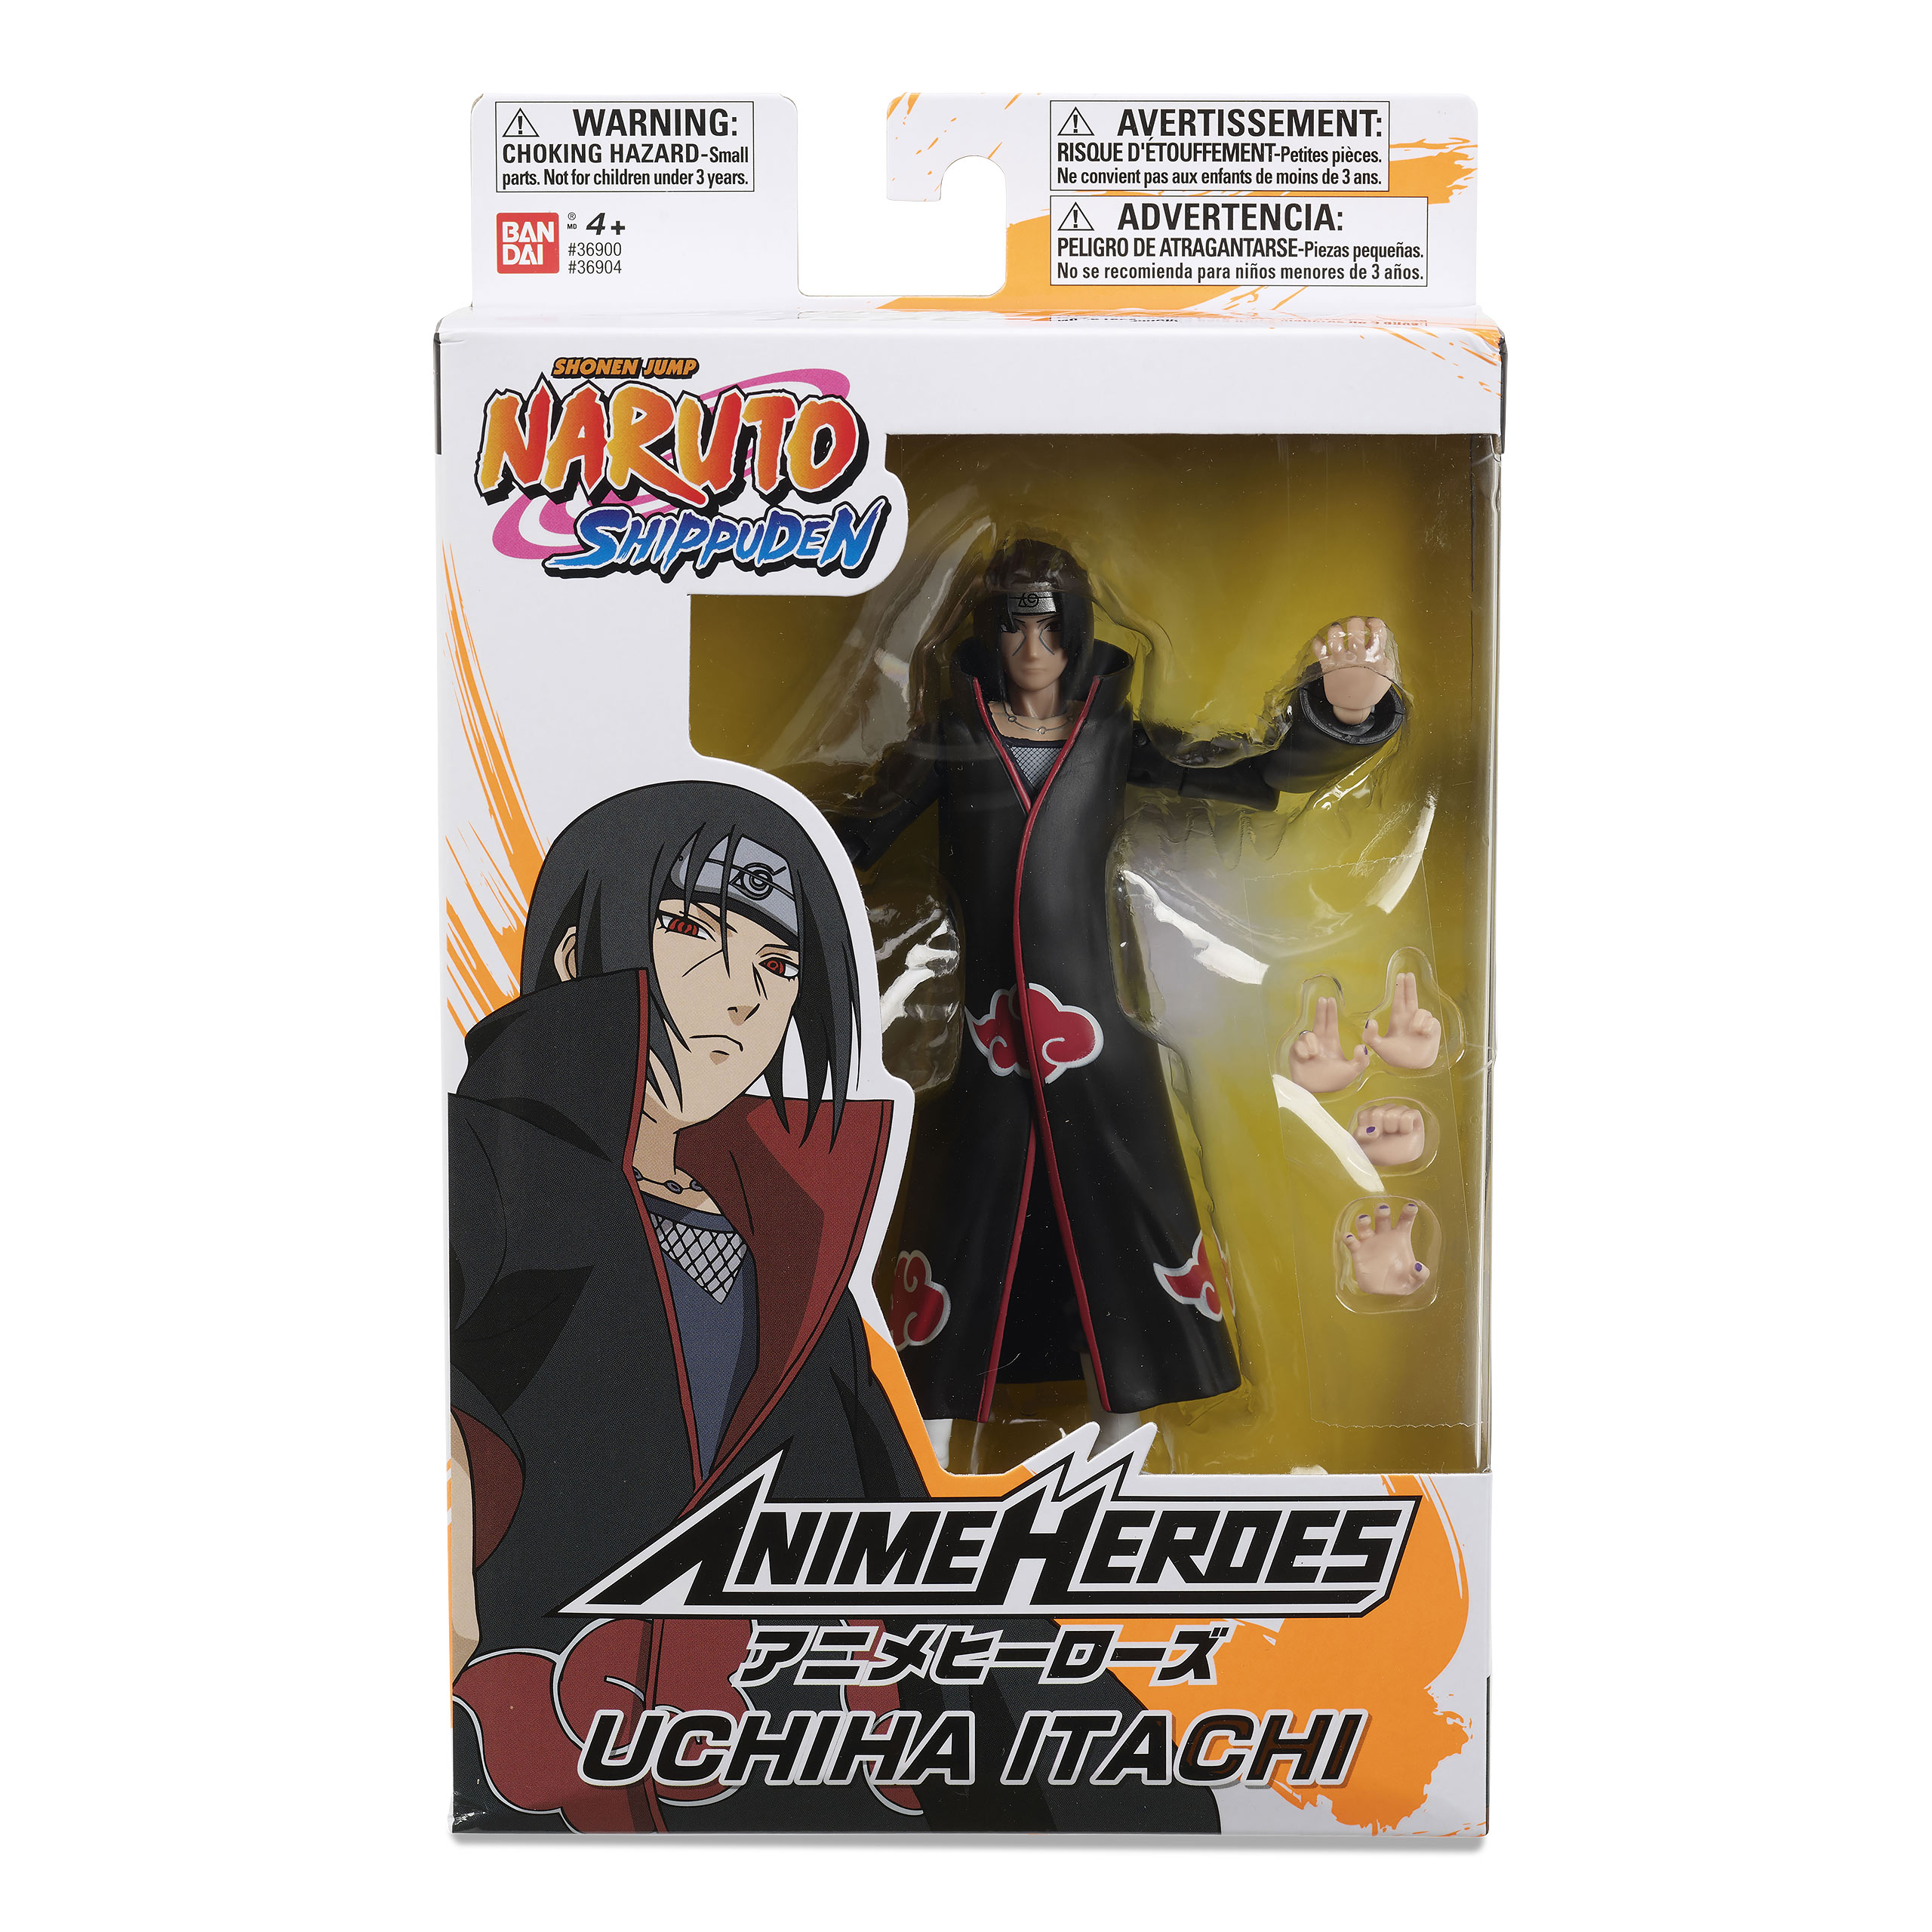 Naruto Shippuden - Uchiha Itachi Anime Heroes Actiefiguur